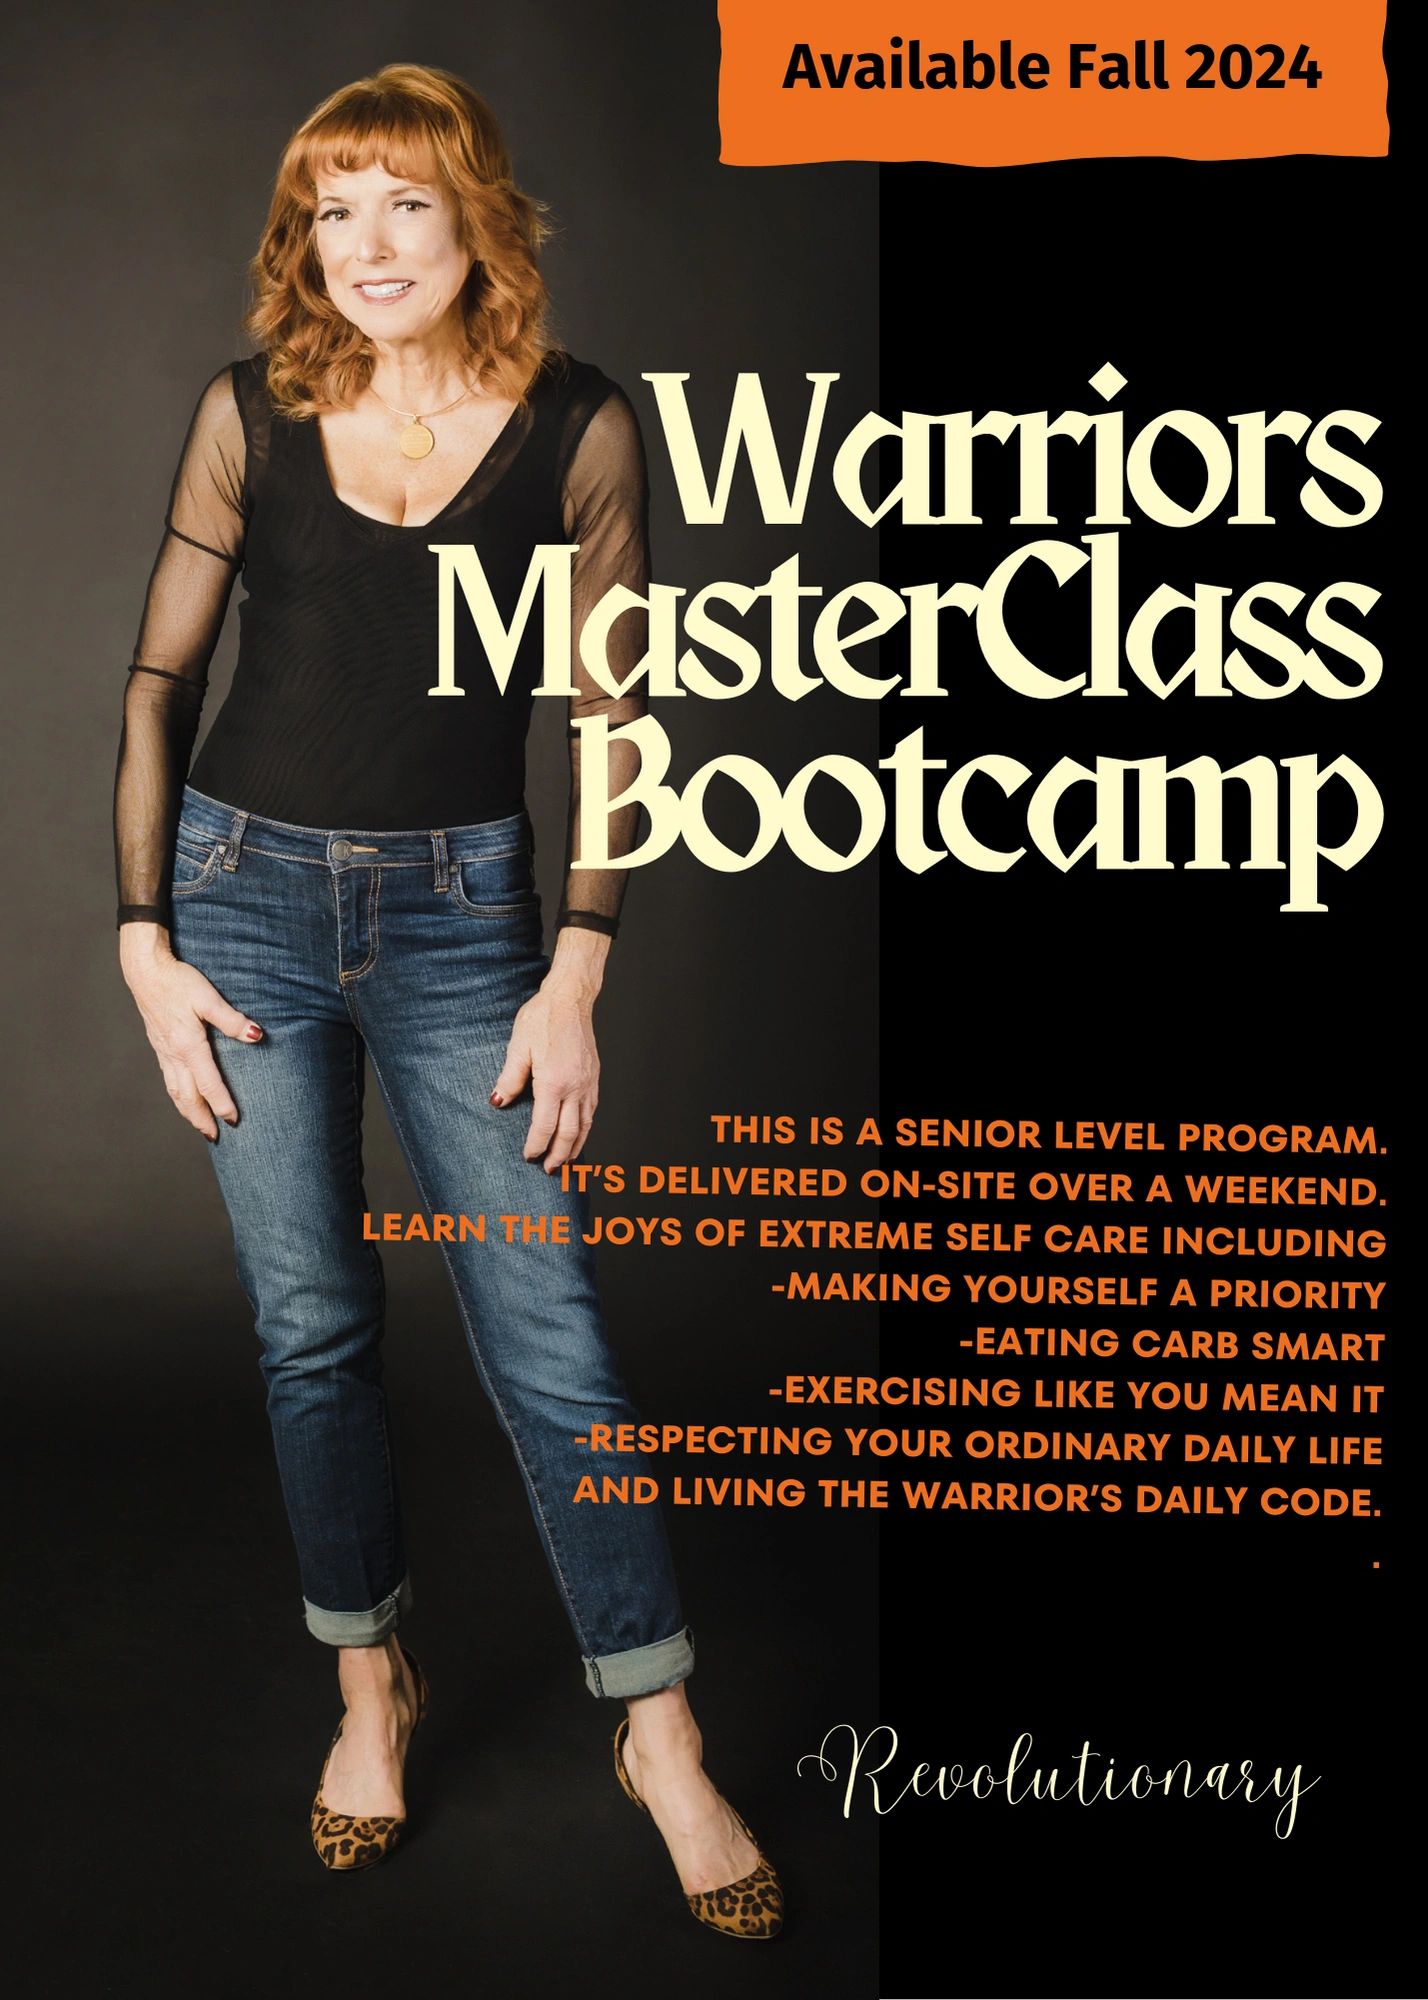 Karen Bentley's MasterClass Bootcamp
#karenbentley #warriorsway #masterclass #bootcamp